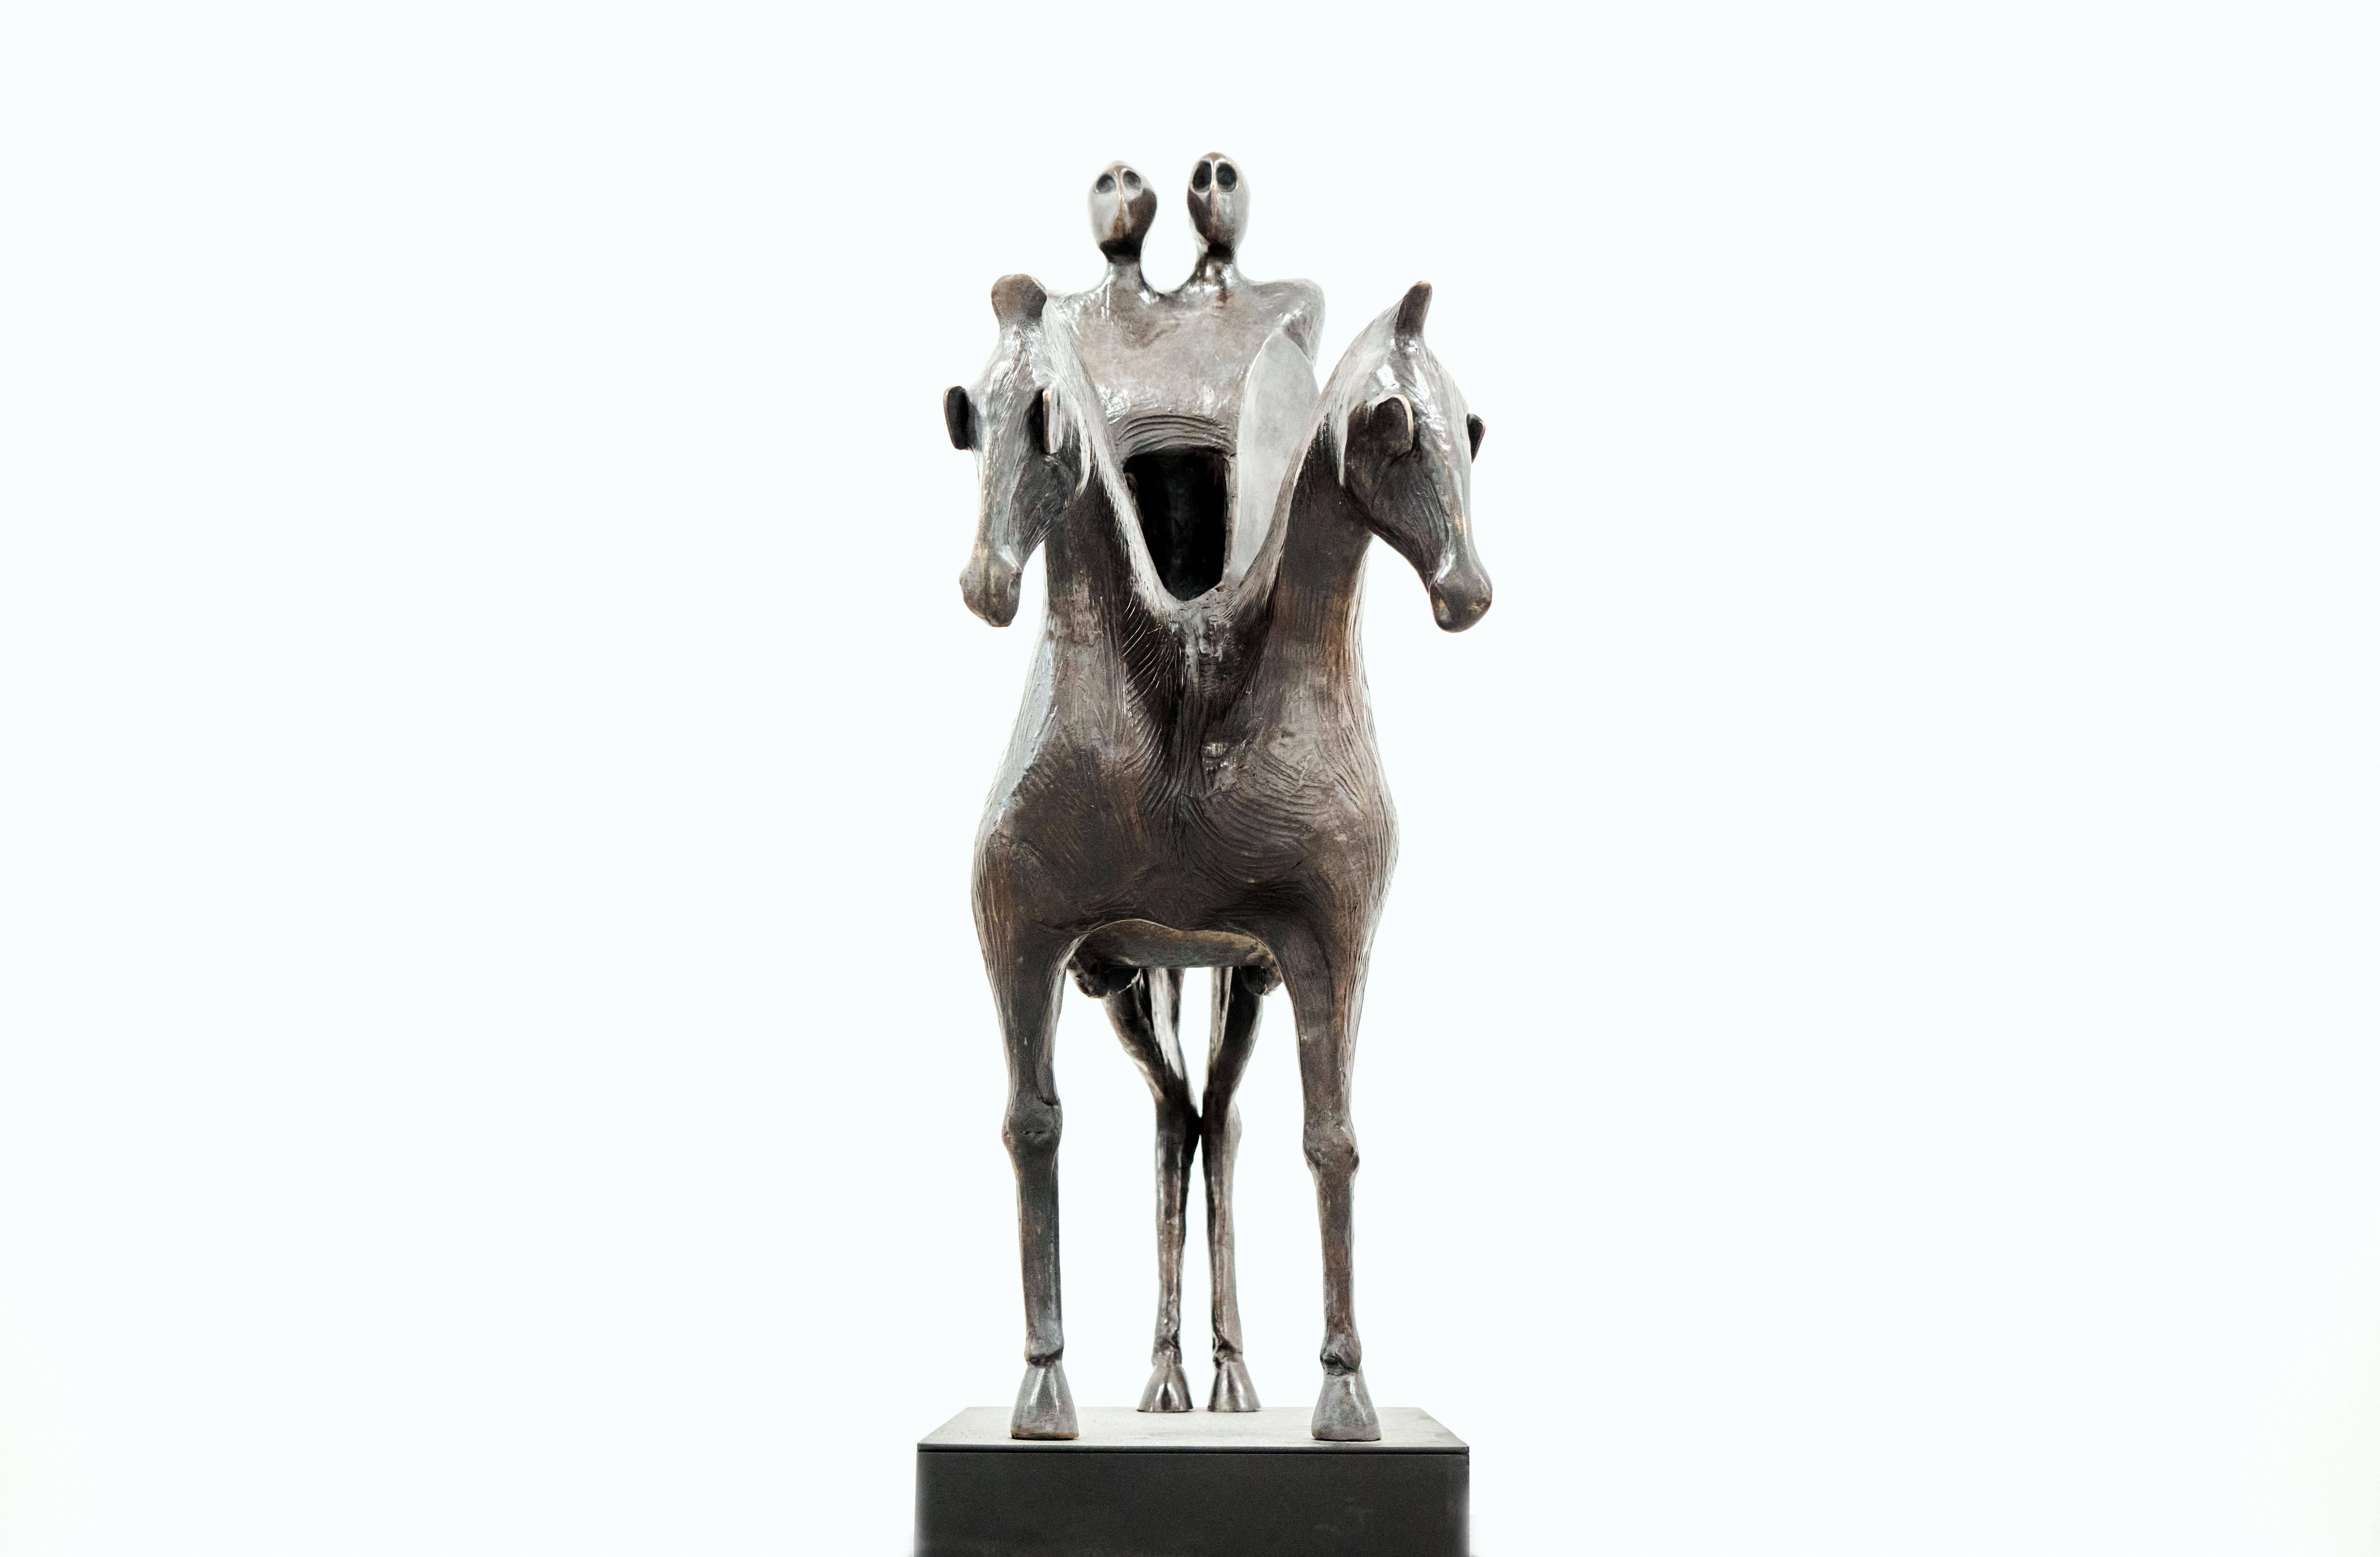 Jorge Seguí,  Falsos Heroes en Caballos Míticos, 2010-2013, bronze, édition 1/7  - Or Figurative Sculpture par Jorge Seguí 